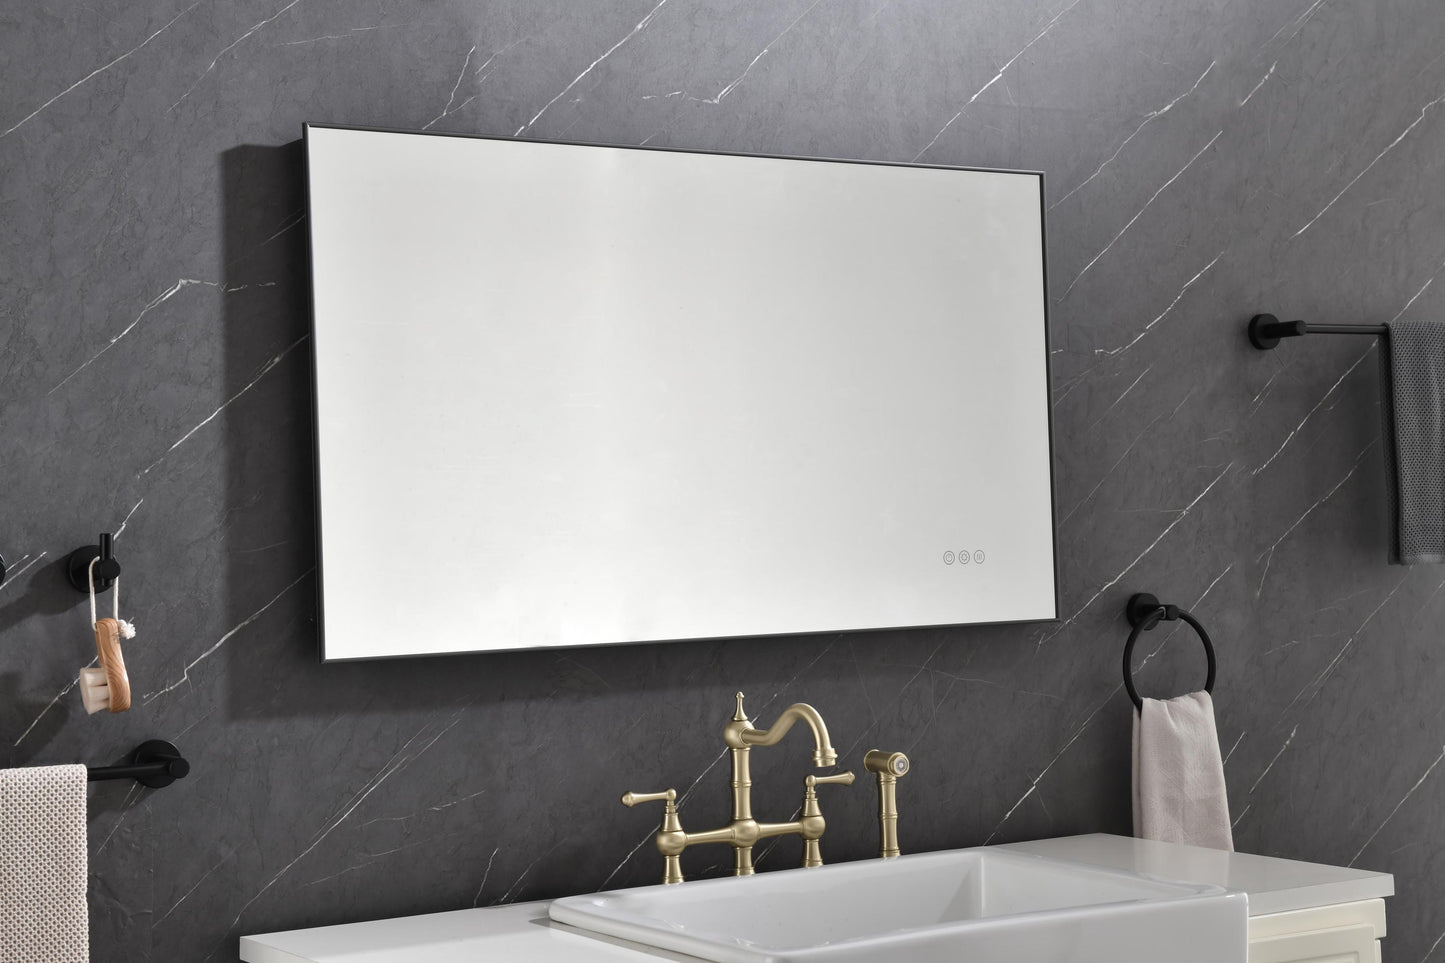 42x 24 Inch LED Mirror Bathroom Vanity Mirror with Back Light, Wall Mount Anti-Fog Memory Large Adjustable Vanity Mirror